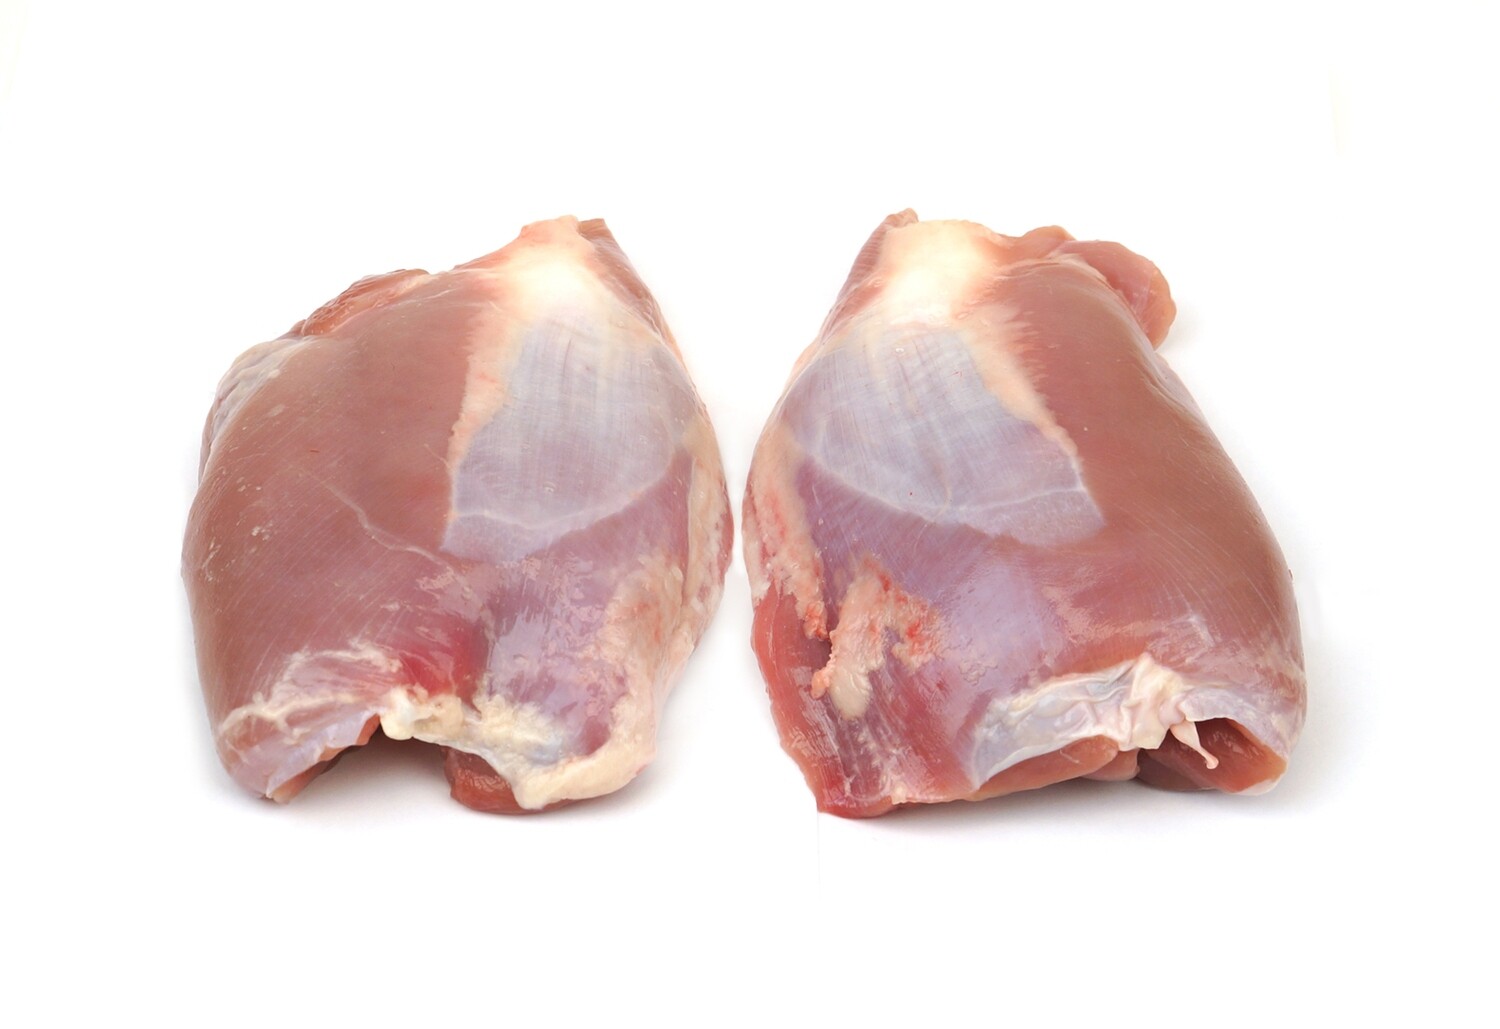 Boneless Turkey Thigh Meat